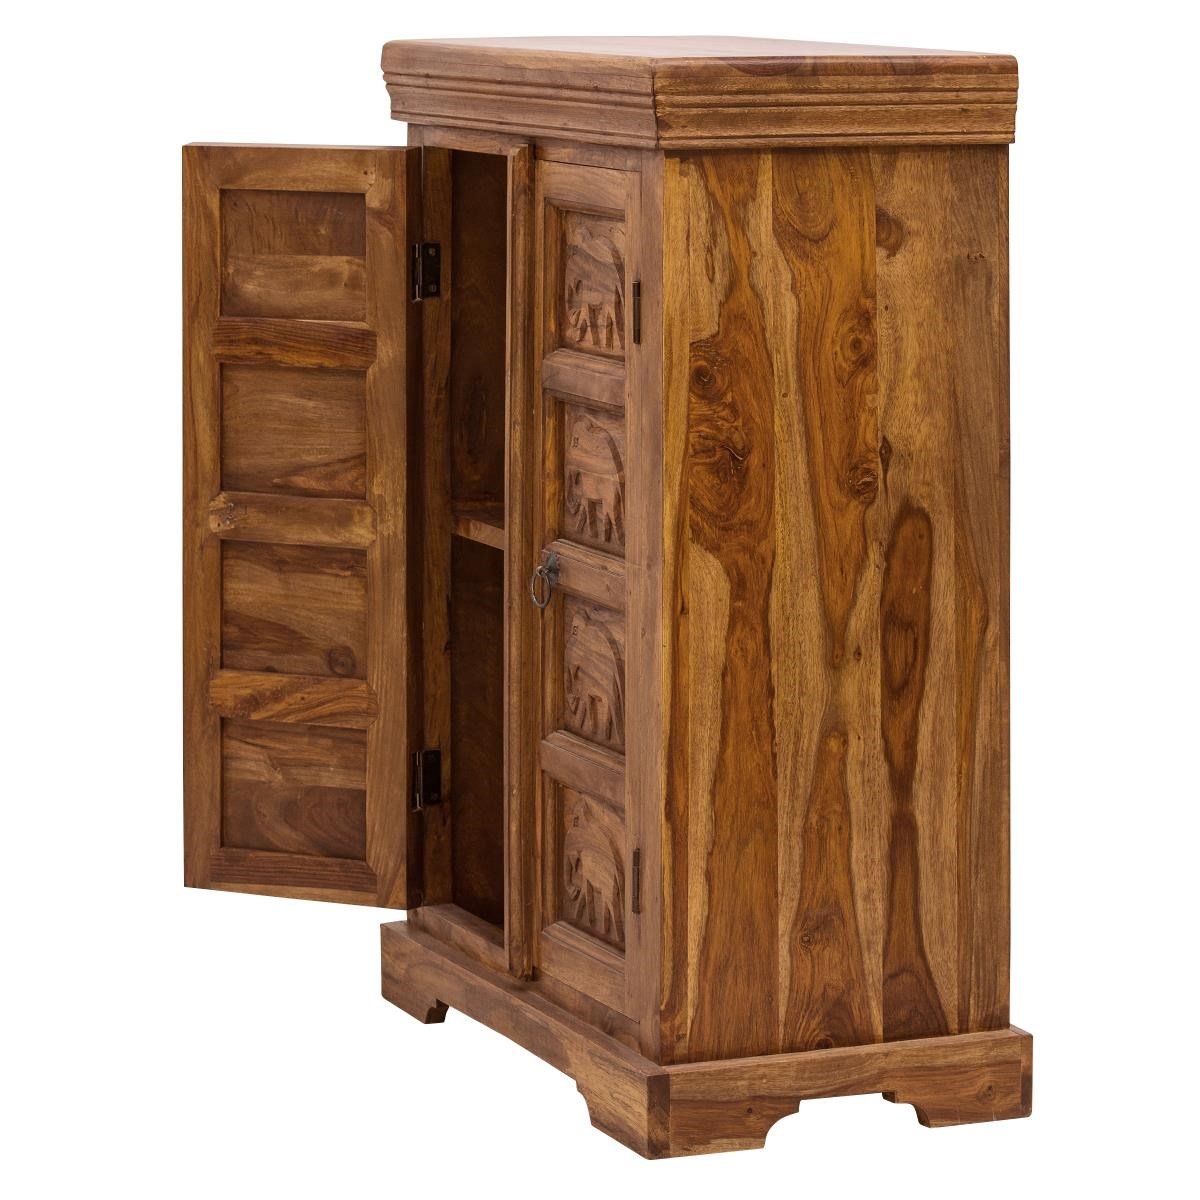 Haathi — wooden Cupboard